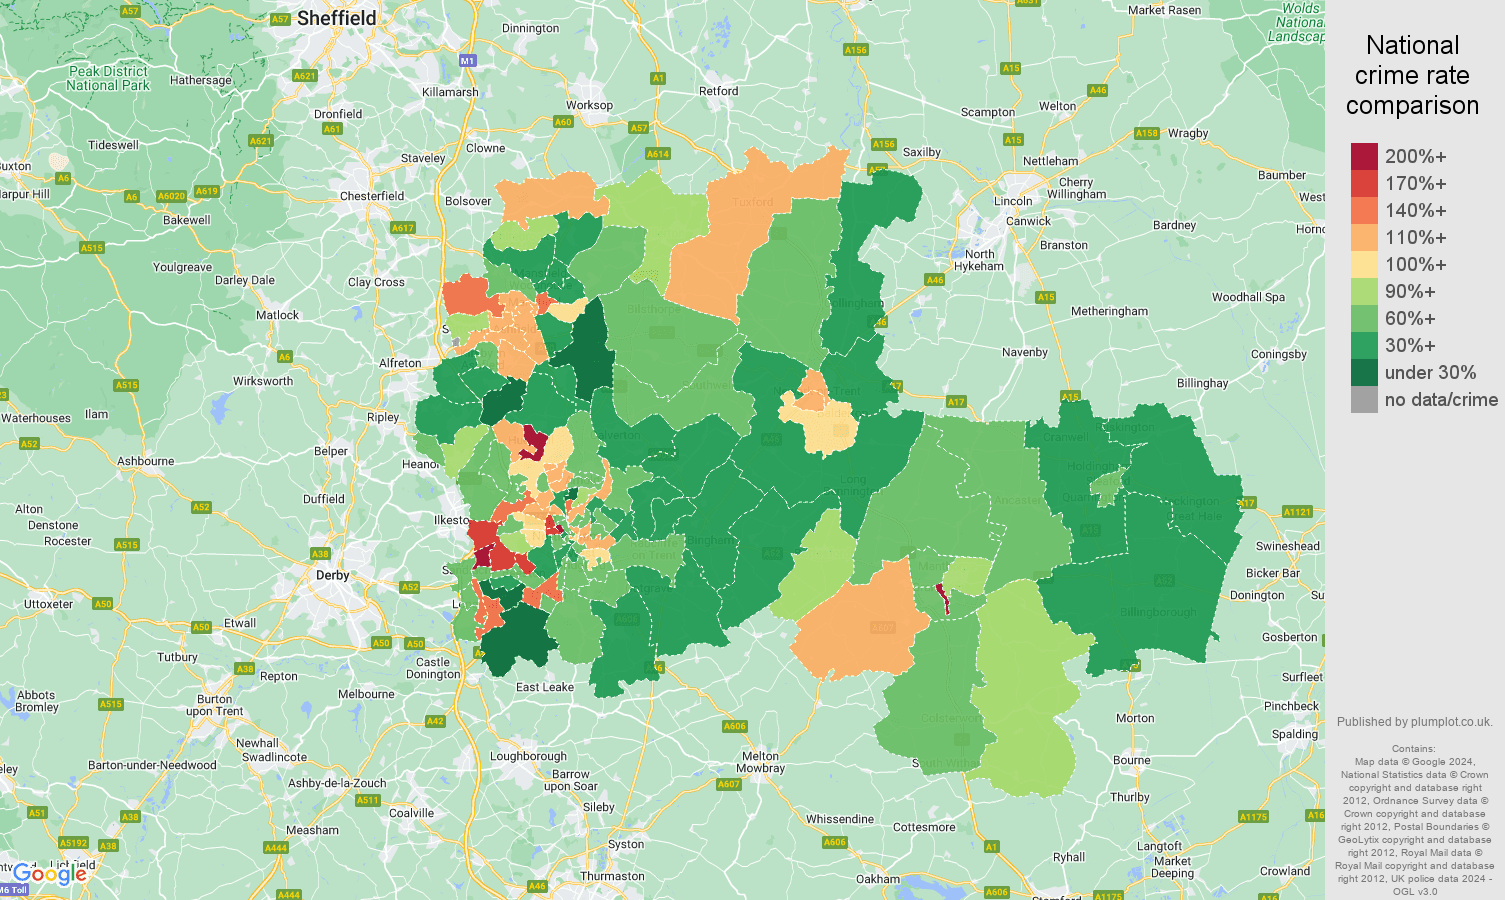 Nottingham burglary crime rate comparison map